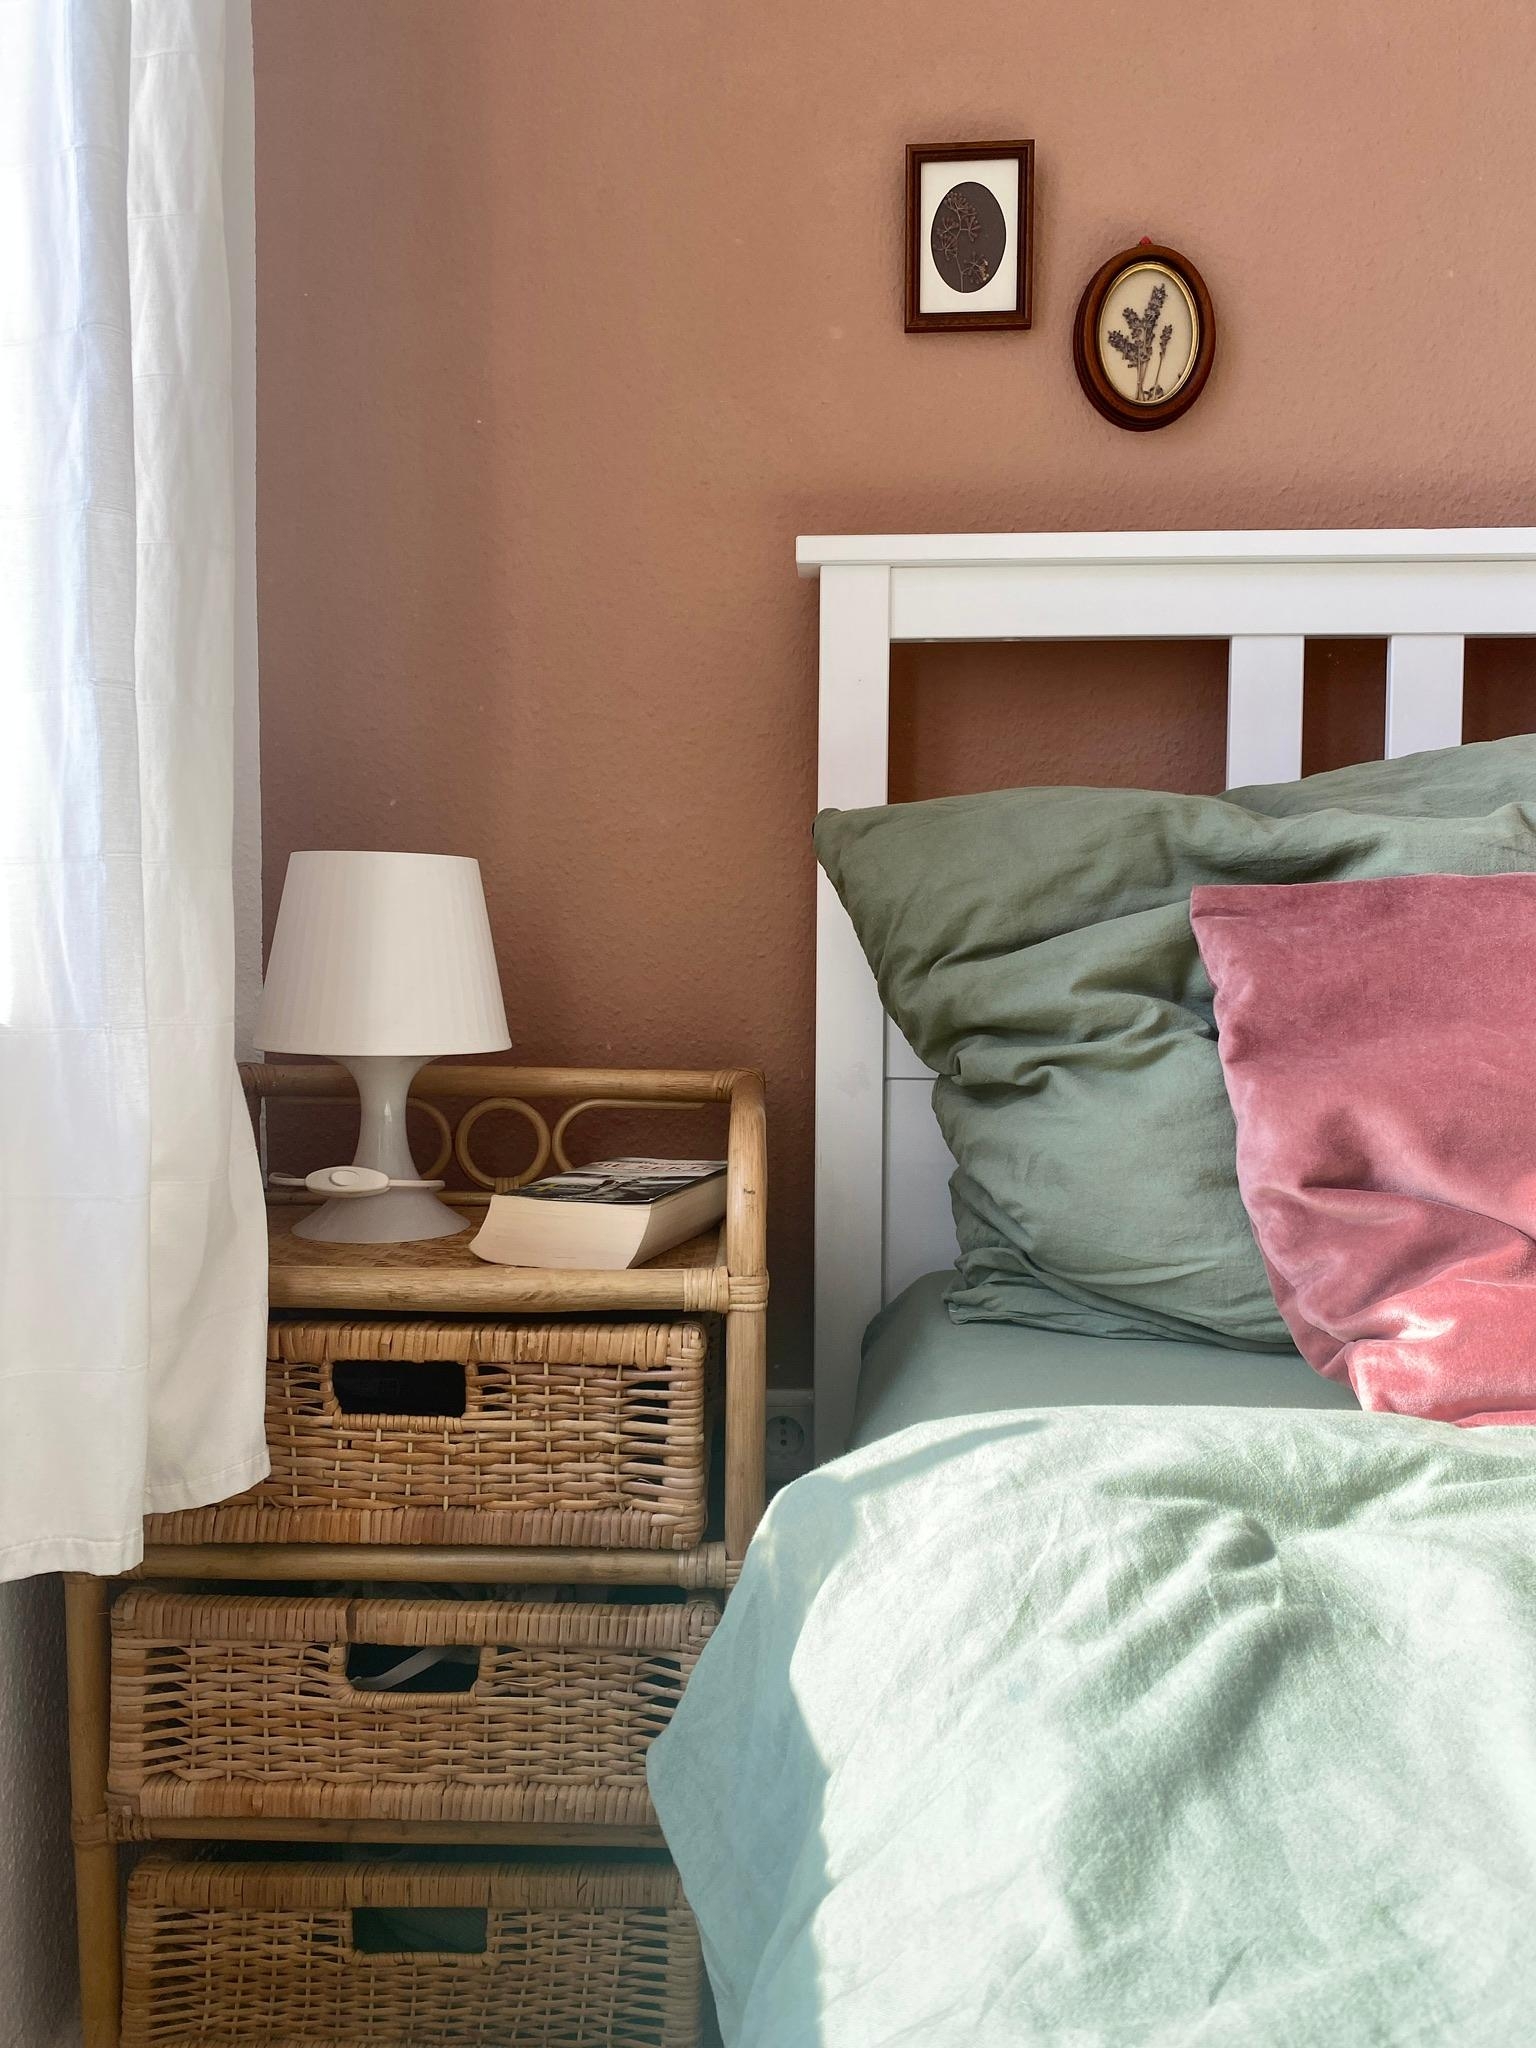 Boho-Bedroom 🧡
#schlafzimmerideen #boho #rattan #vintage #grün #altbau #bedroom #schlafzimmer